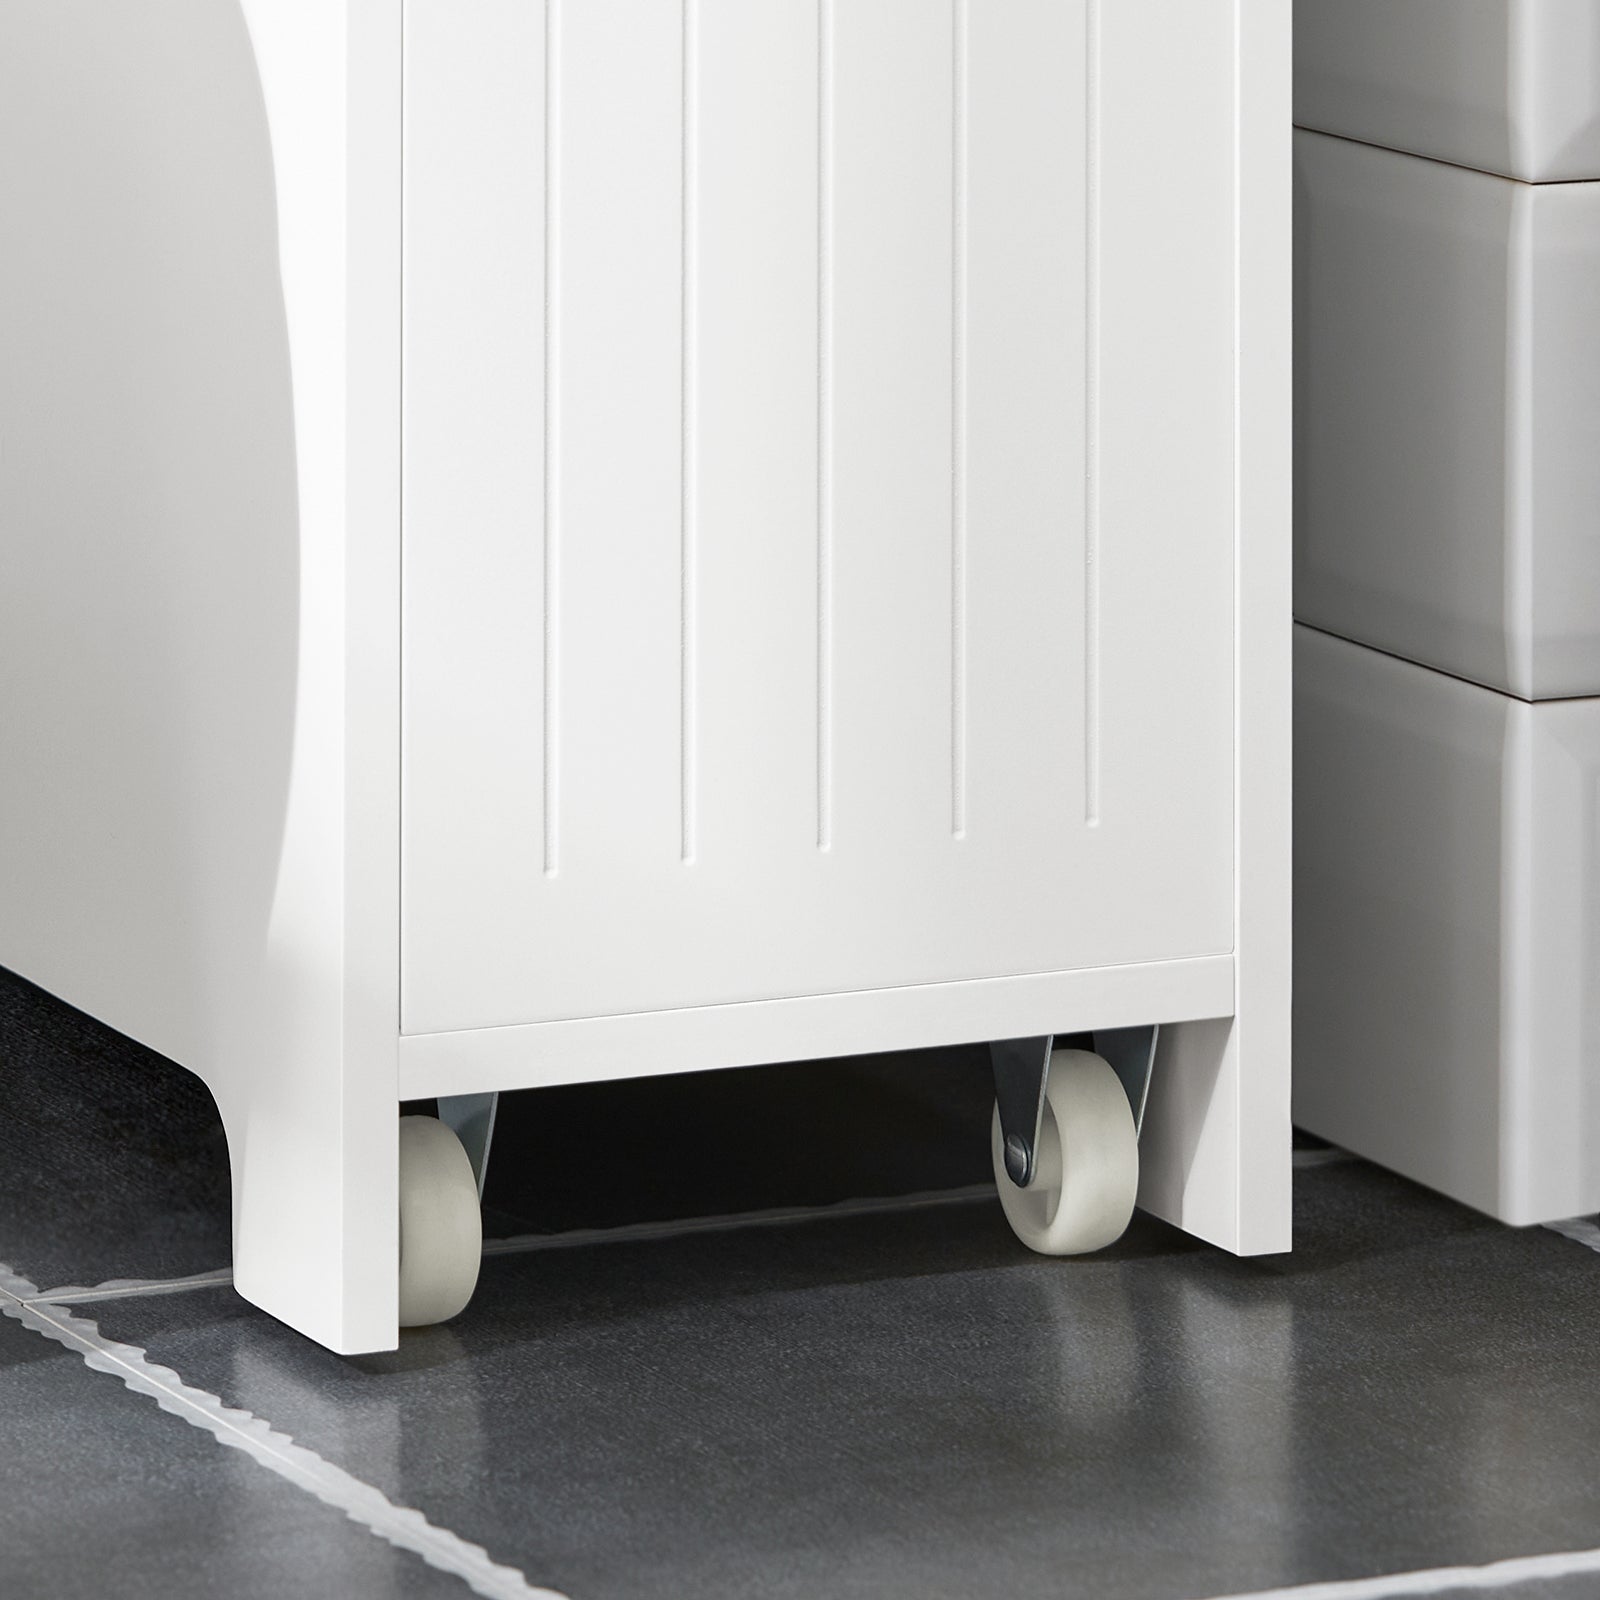 SoBuy BZR111-W, Narrow Bathroom Cabinet Storage Cabinet Toilet Paper Roll Holder